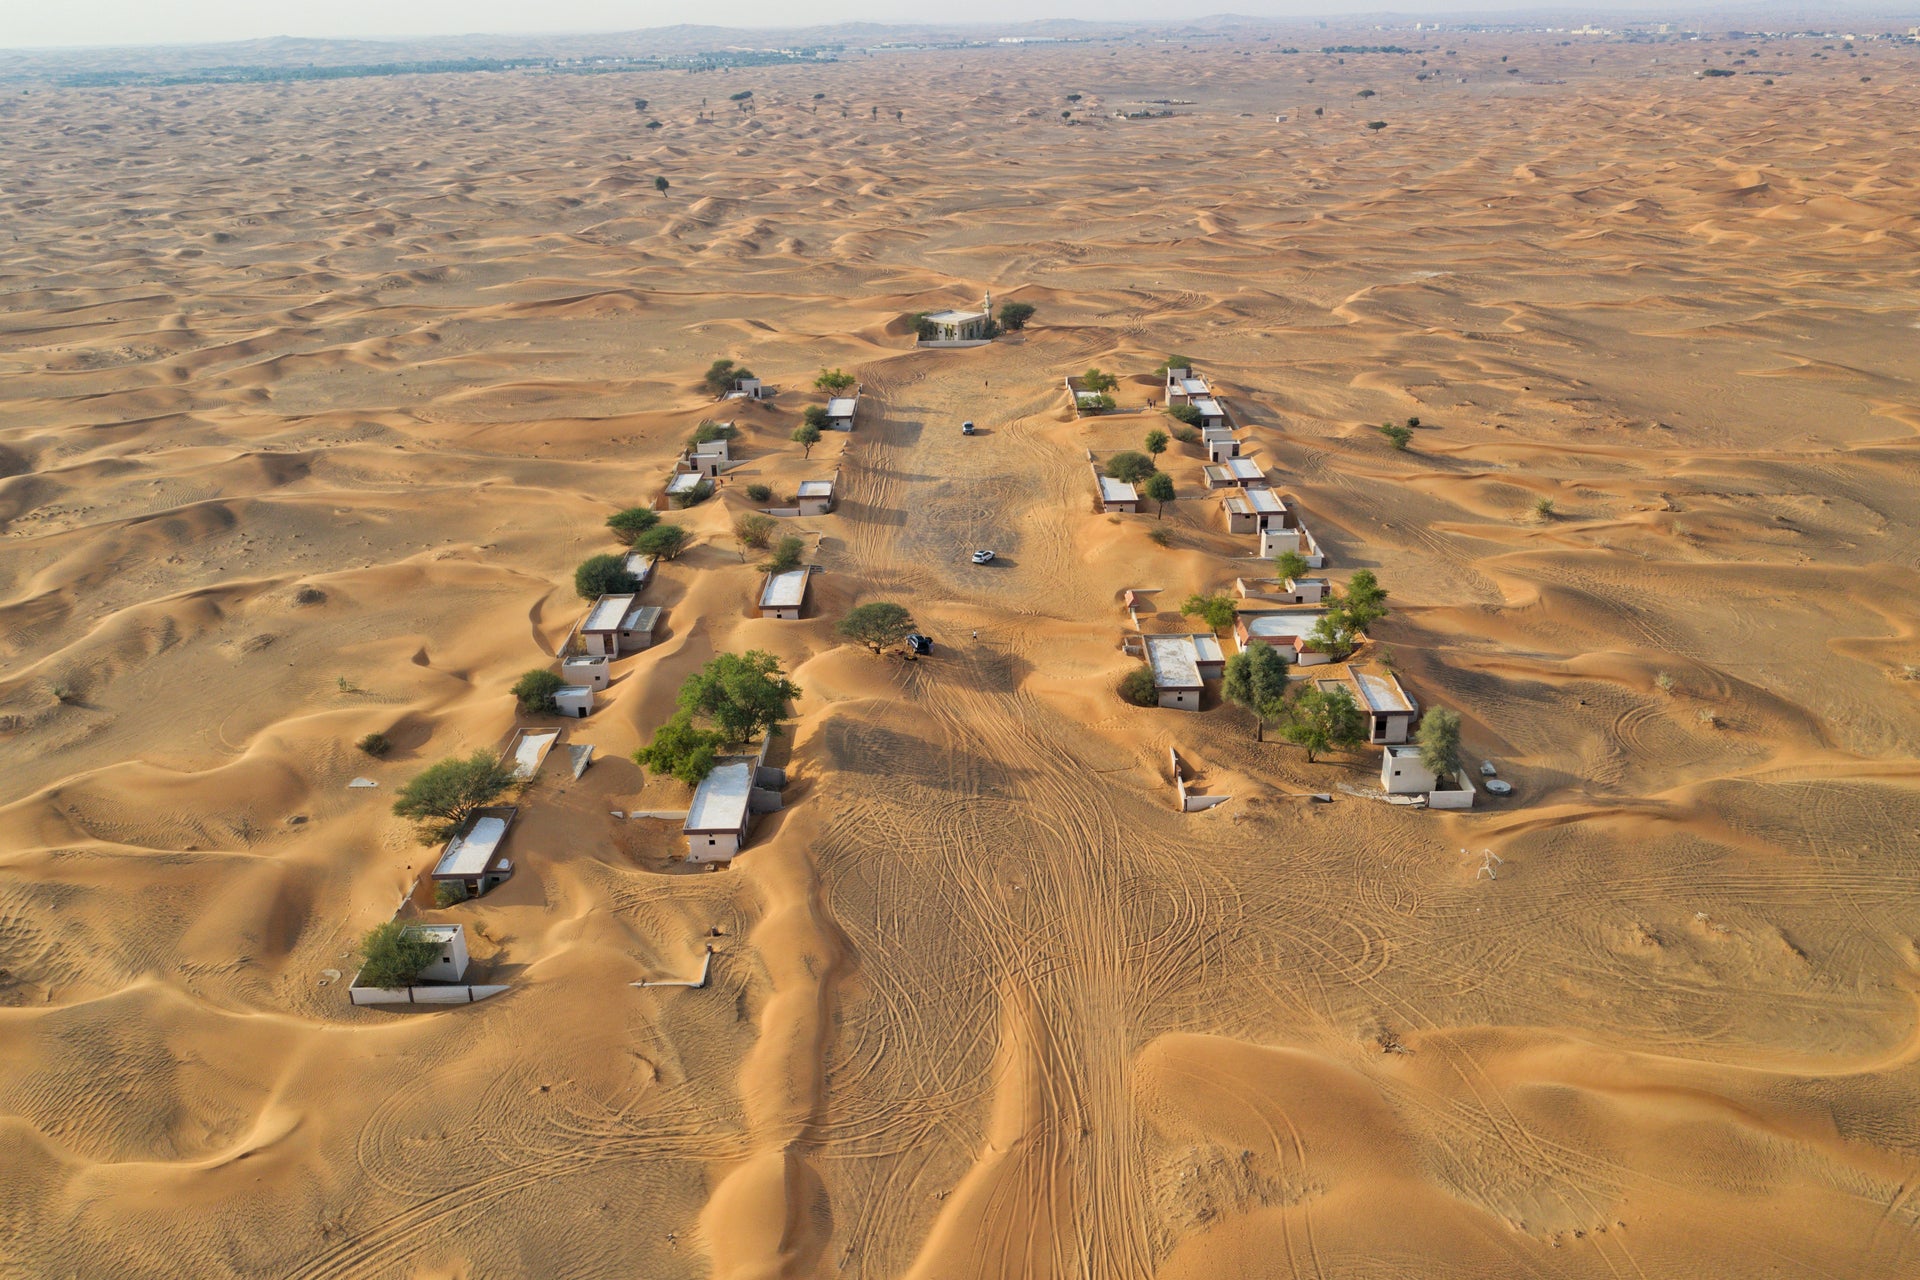 Città fantasma di Al Madam + Dune bashing e sandboarding